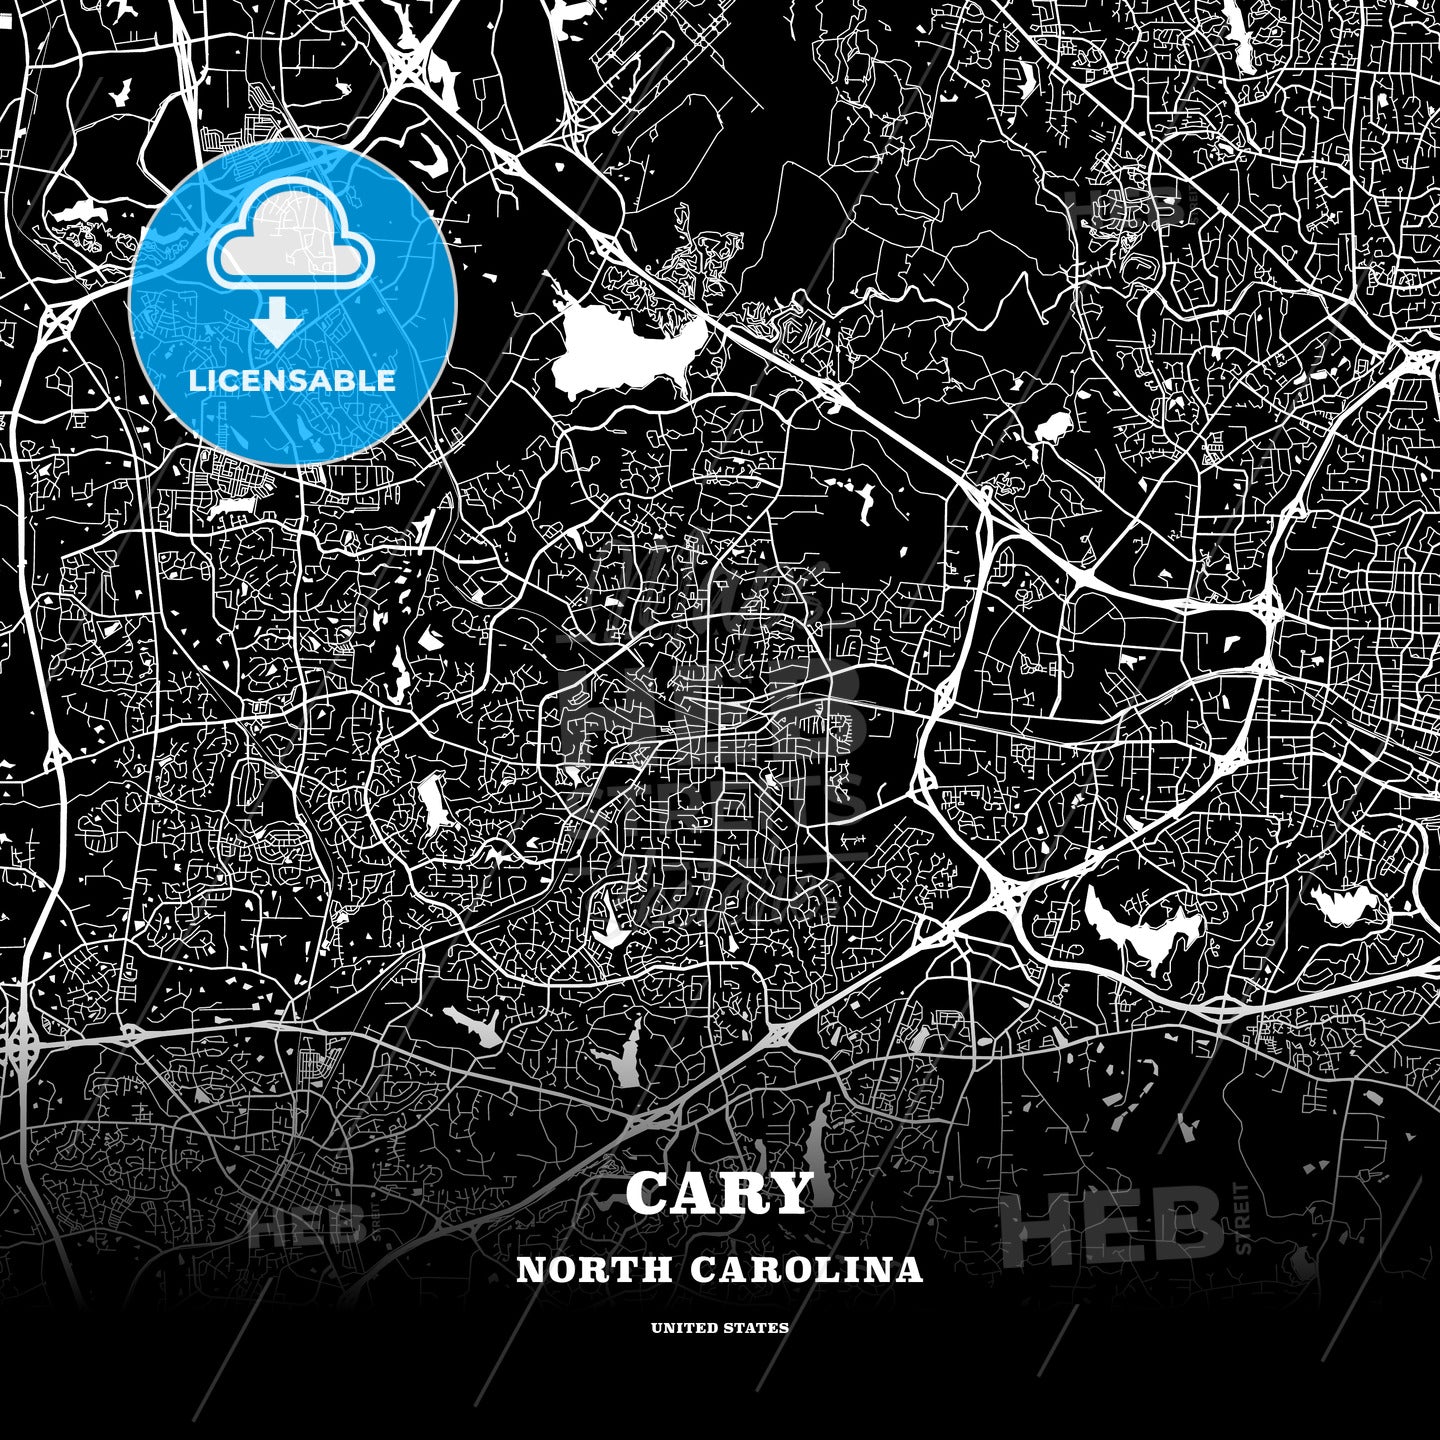 Cary, North Carolina, USA map